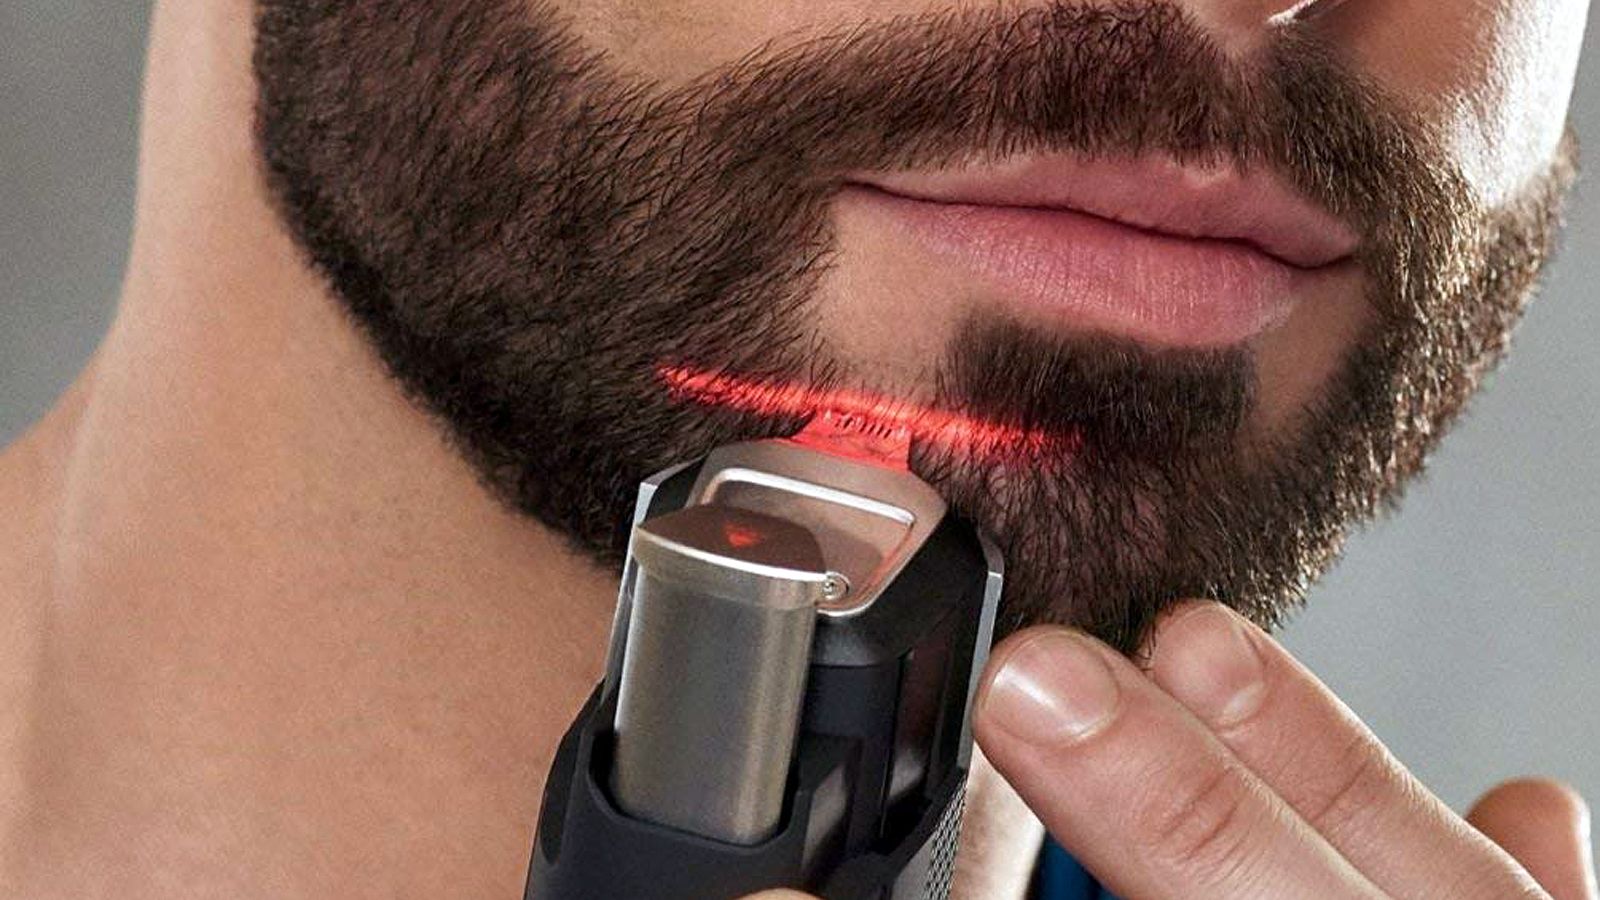 philips beard trimmer 9000 price